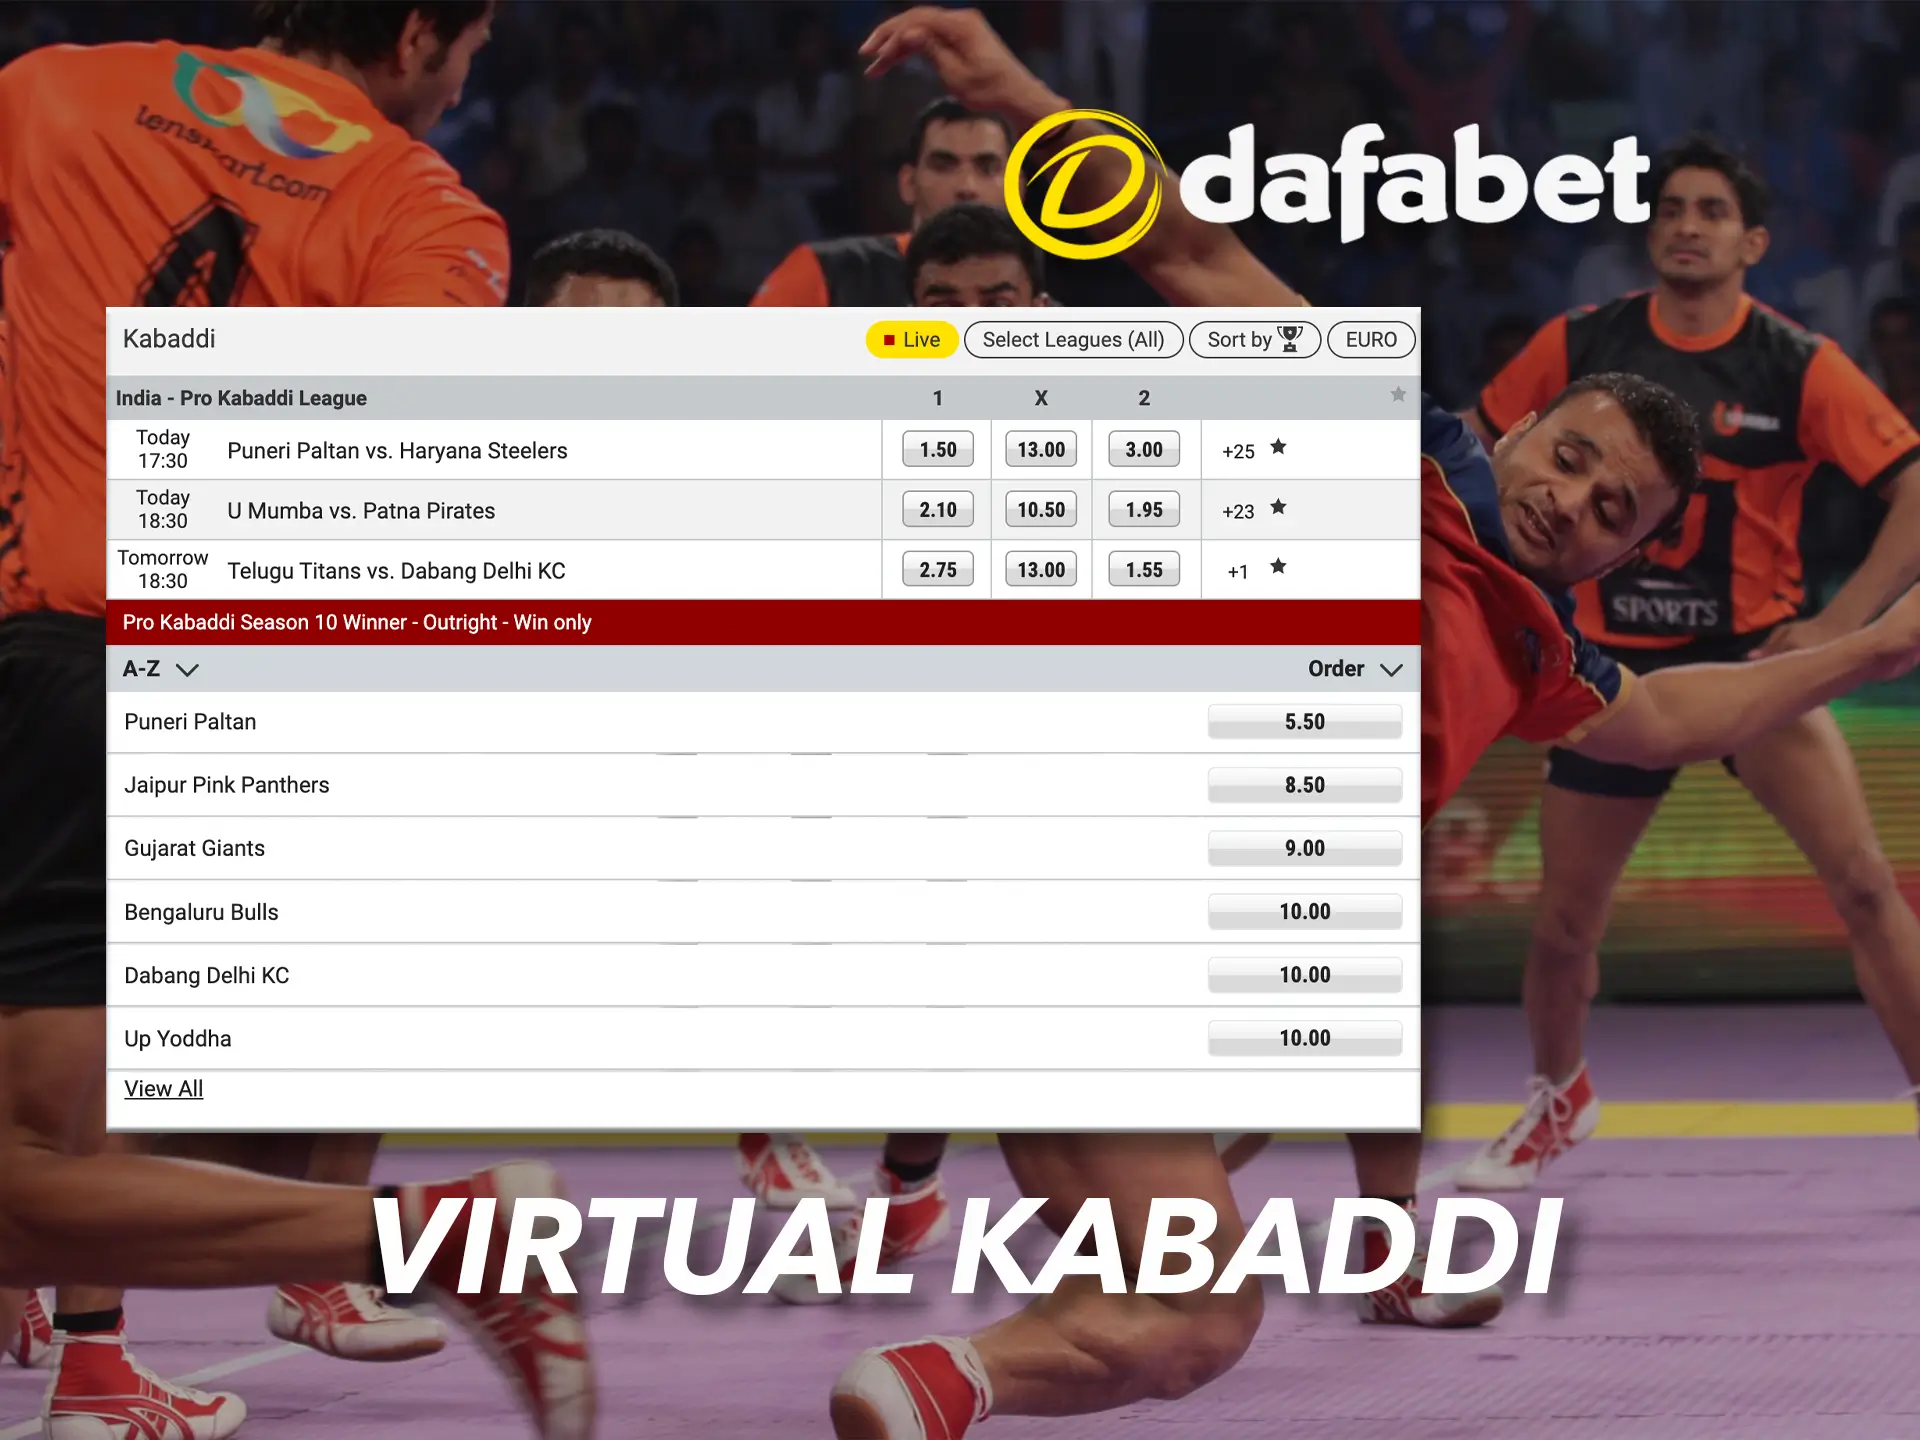 Try your hand at betting on virtual kabaddi at Dafabet.